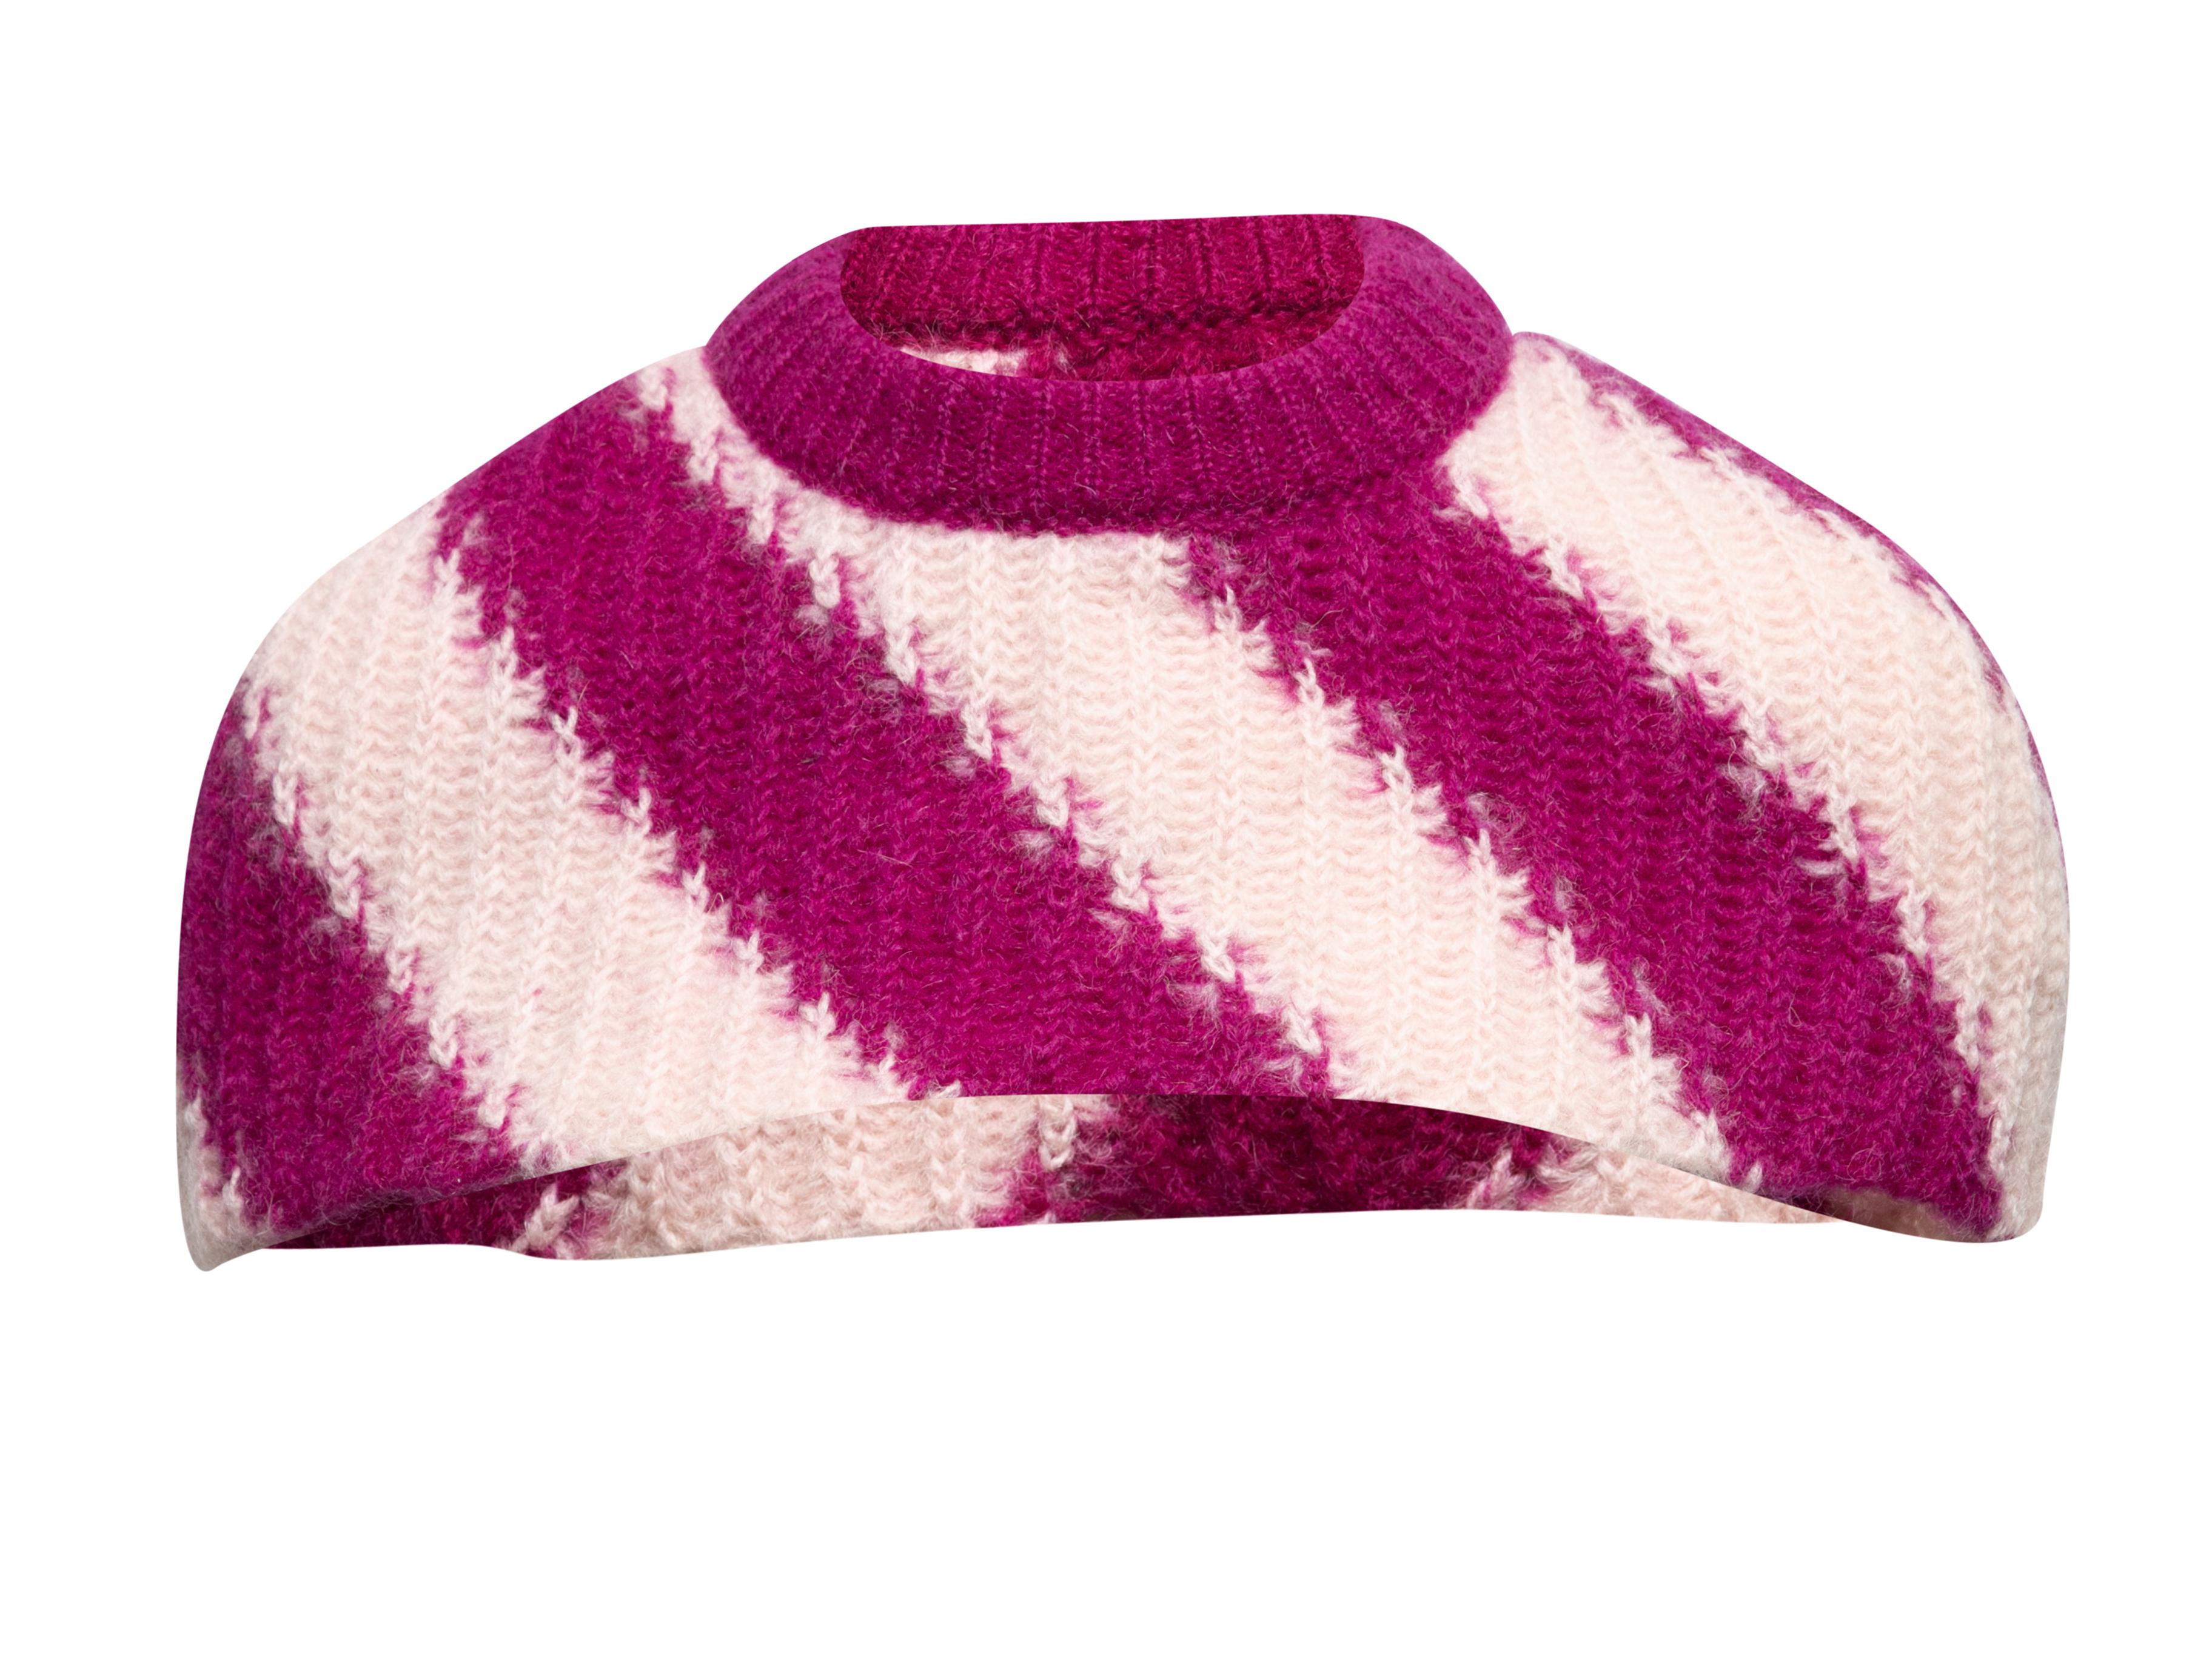 Magenta and white mohair knit shrug by Calvin Klein 205W39NYC. Diagonal striped pattern throughout. Crew neck. 40